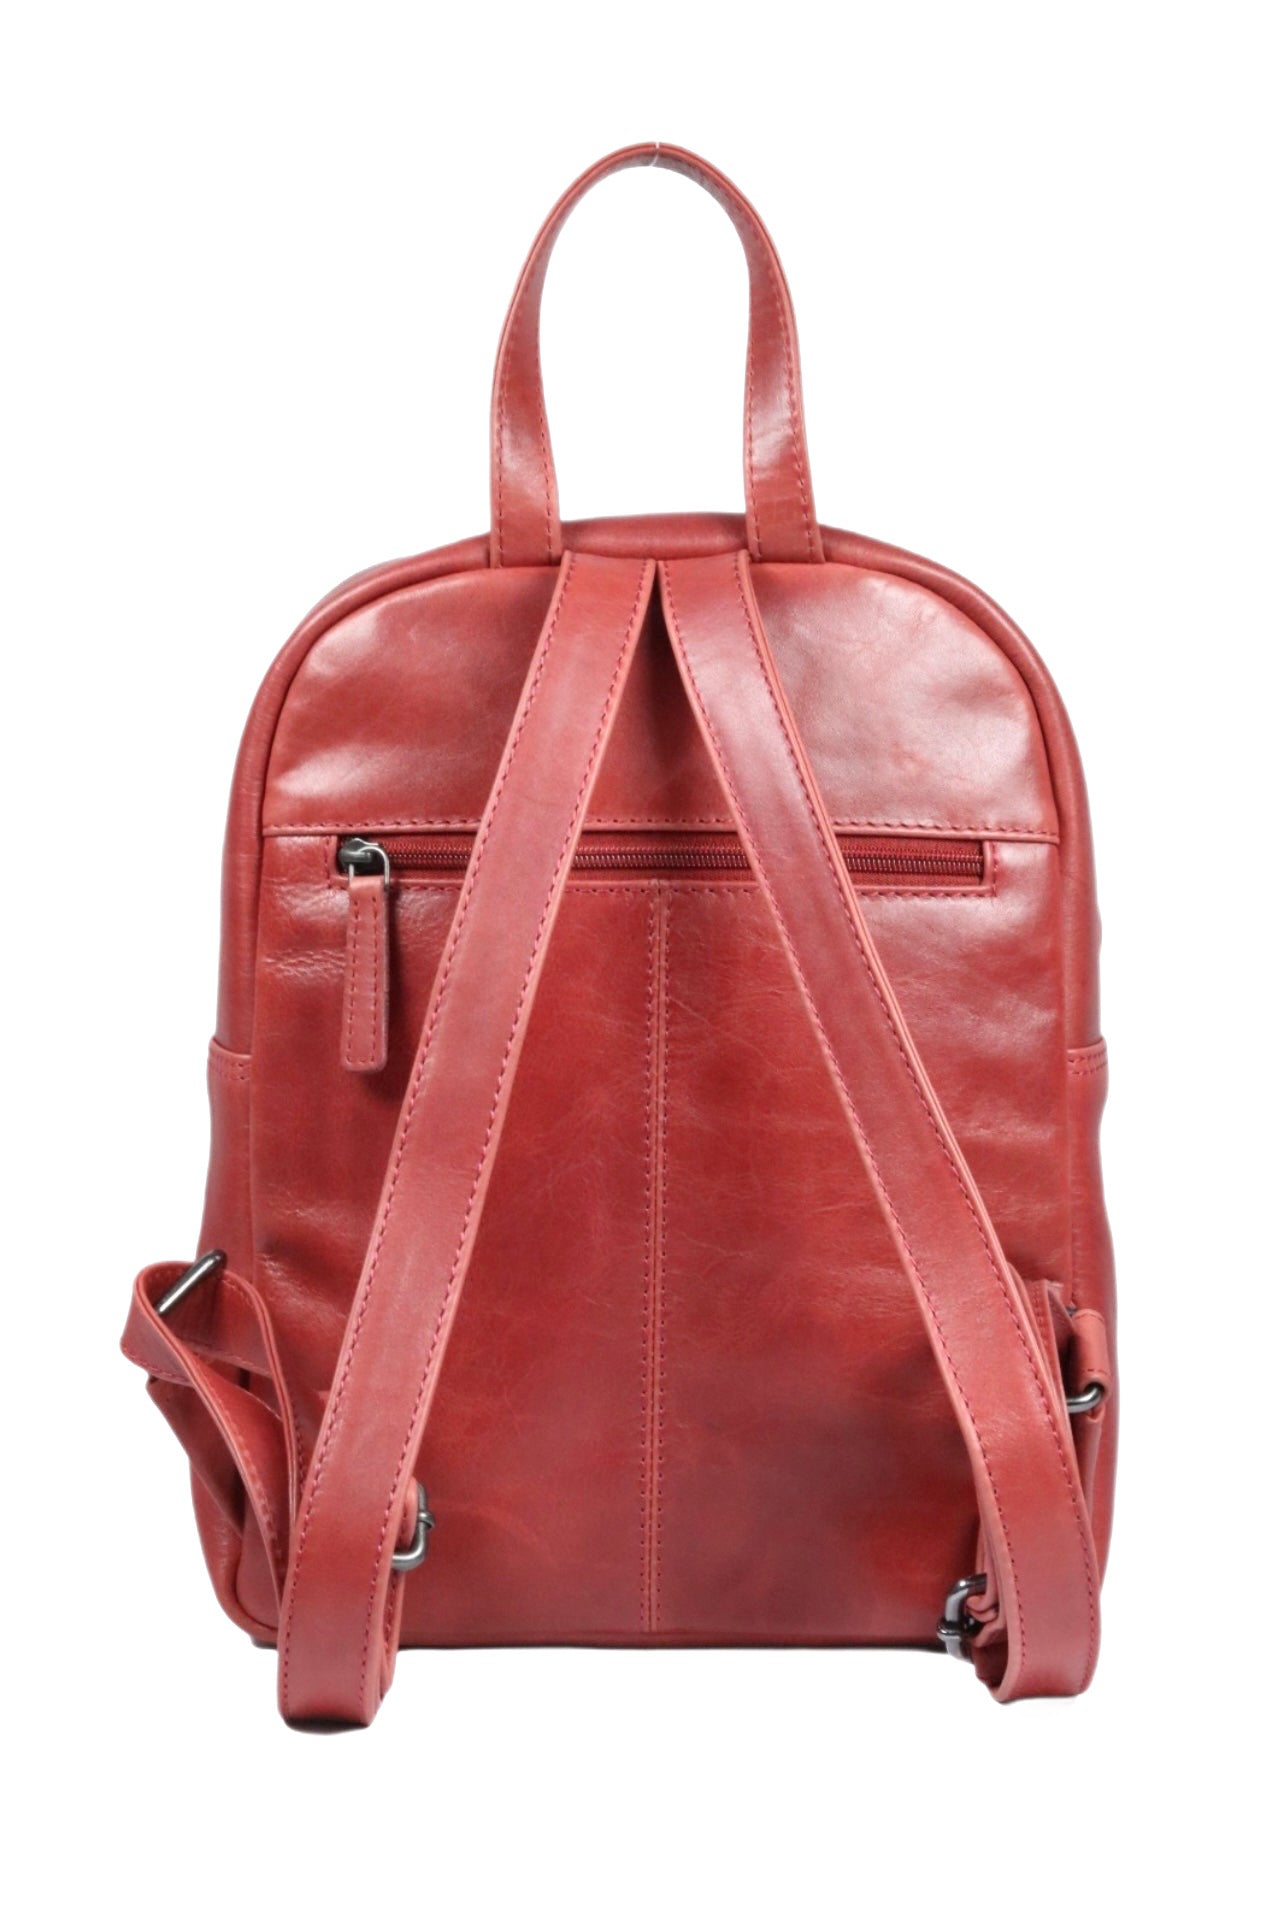 Eros Backpack - Prodigy Bag Company